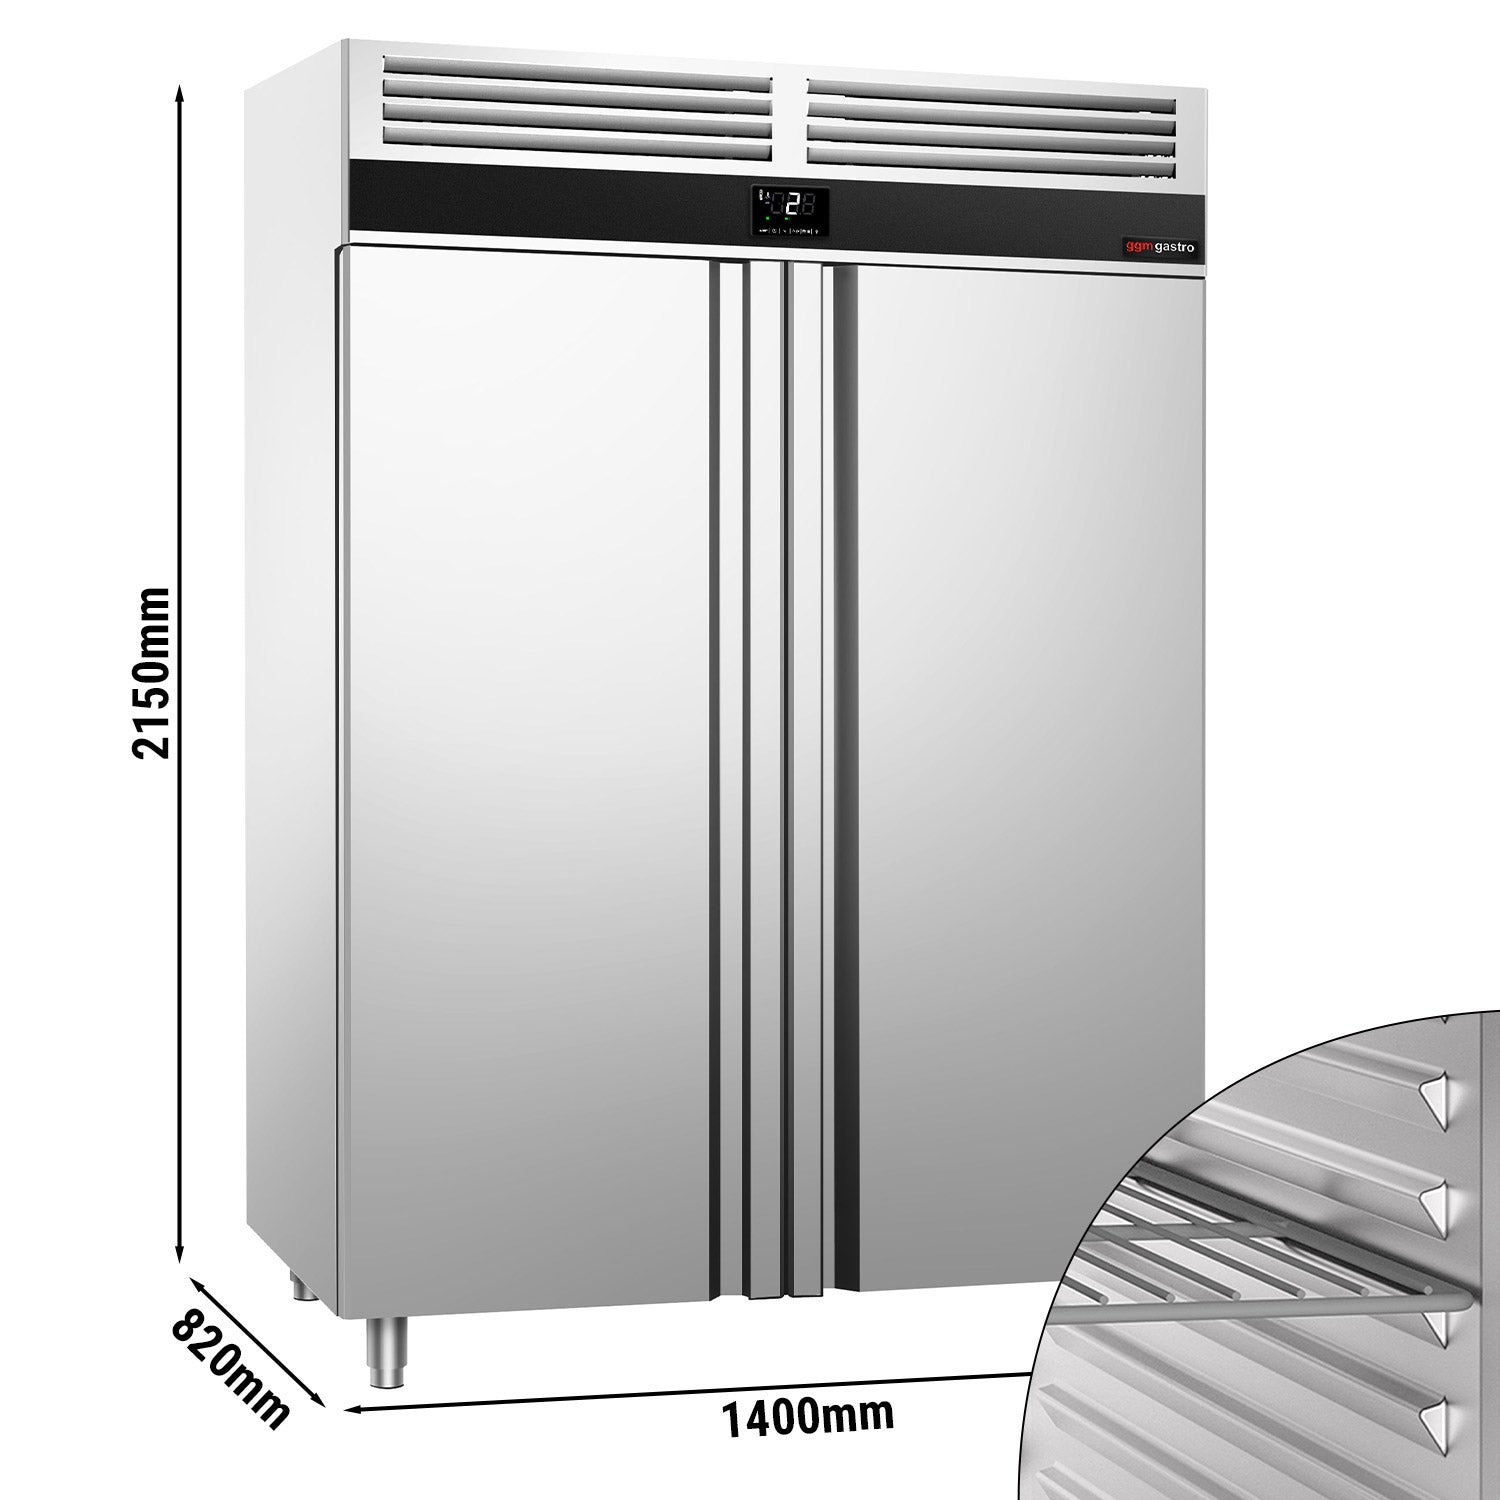 Køleskab - 1,41 x 0,82 m - 1400 liter - med 2 låger i rustfrit stål